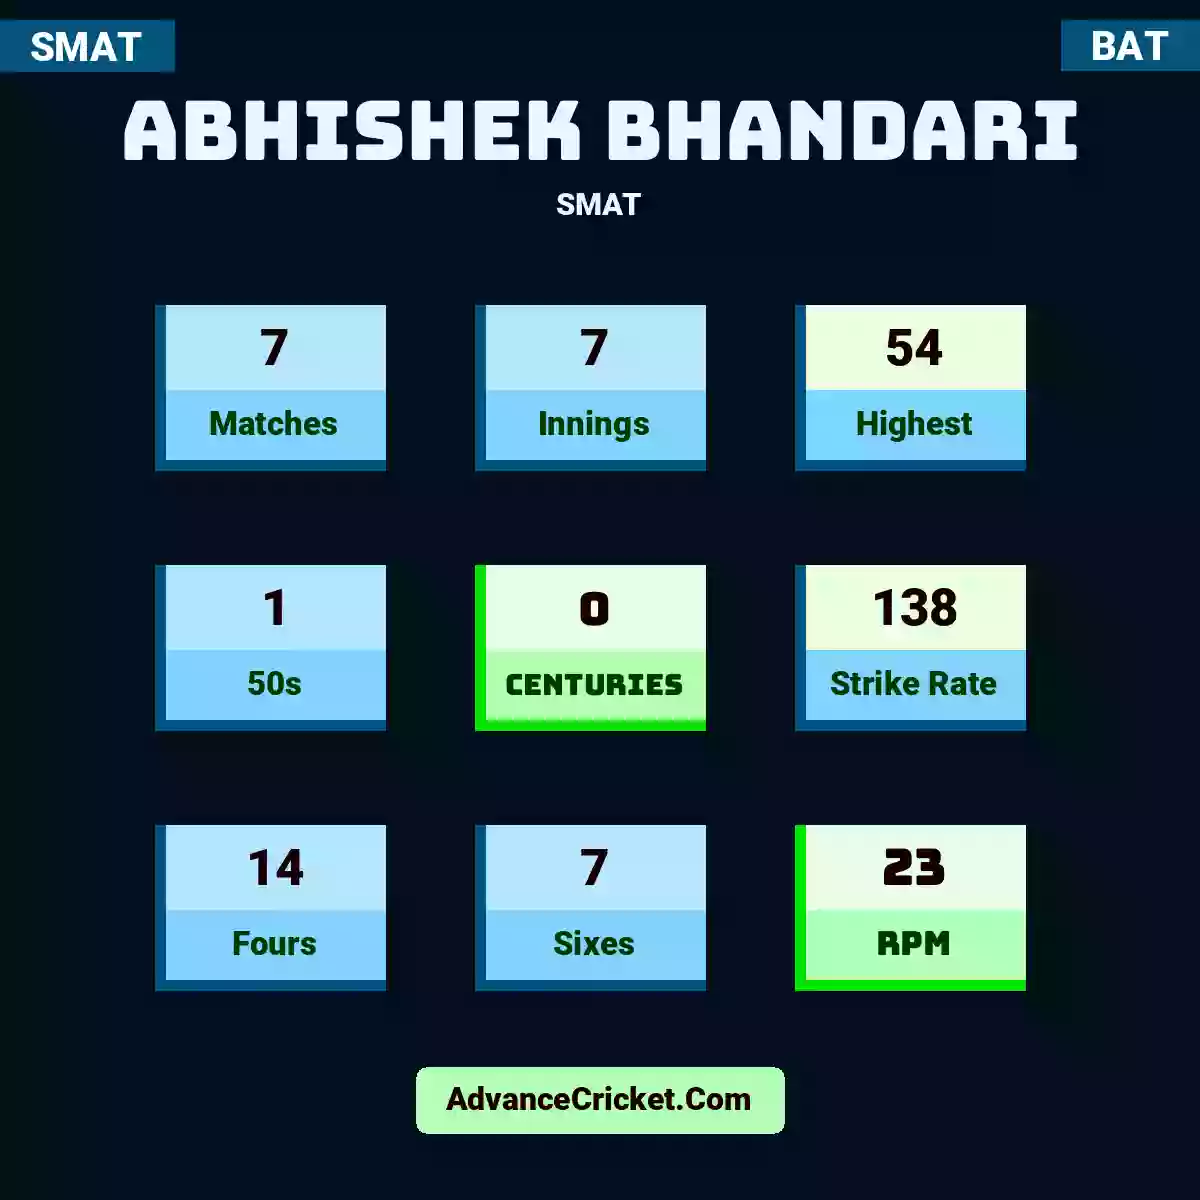 Abhishek Bhandari SMAT , Abhishek Bhandari played 7 matches, scored 54 runs as highest, 1 half-centuries, and 0 centuries, with a strike rate of 138. A.Bhandari hit 14 fours and 7 sixes, with an RPM of 23.